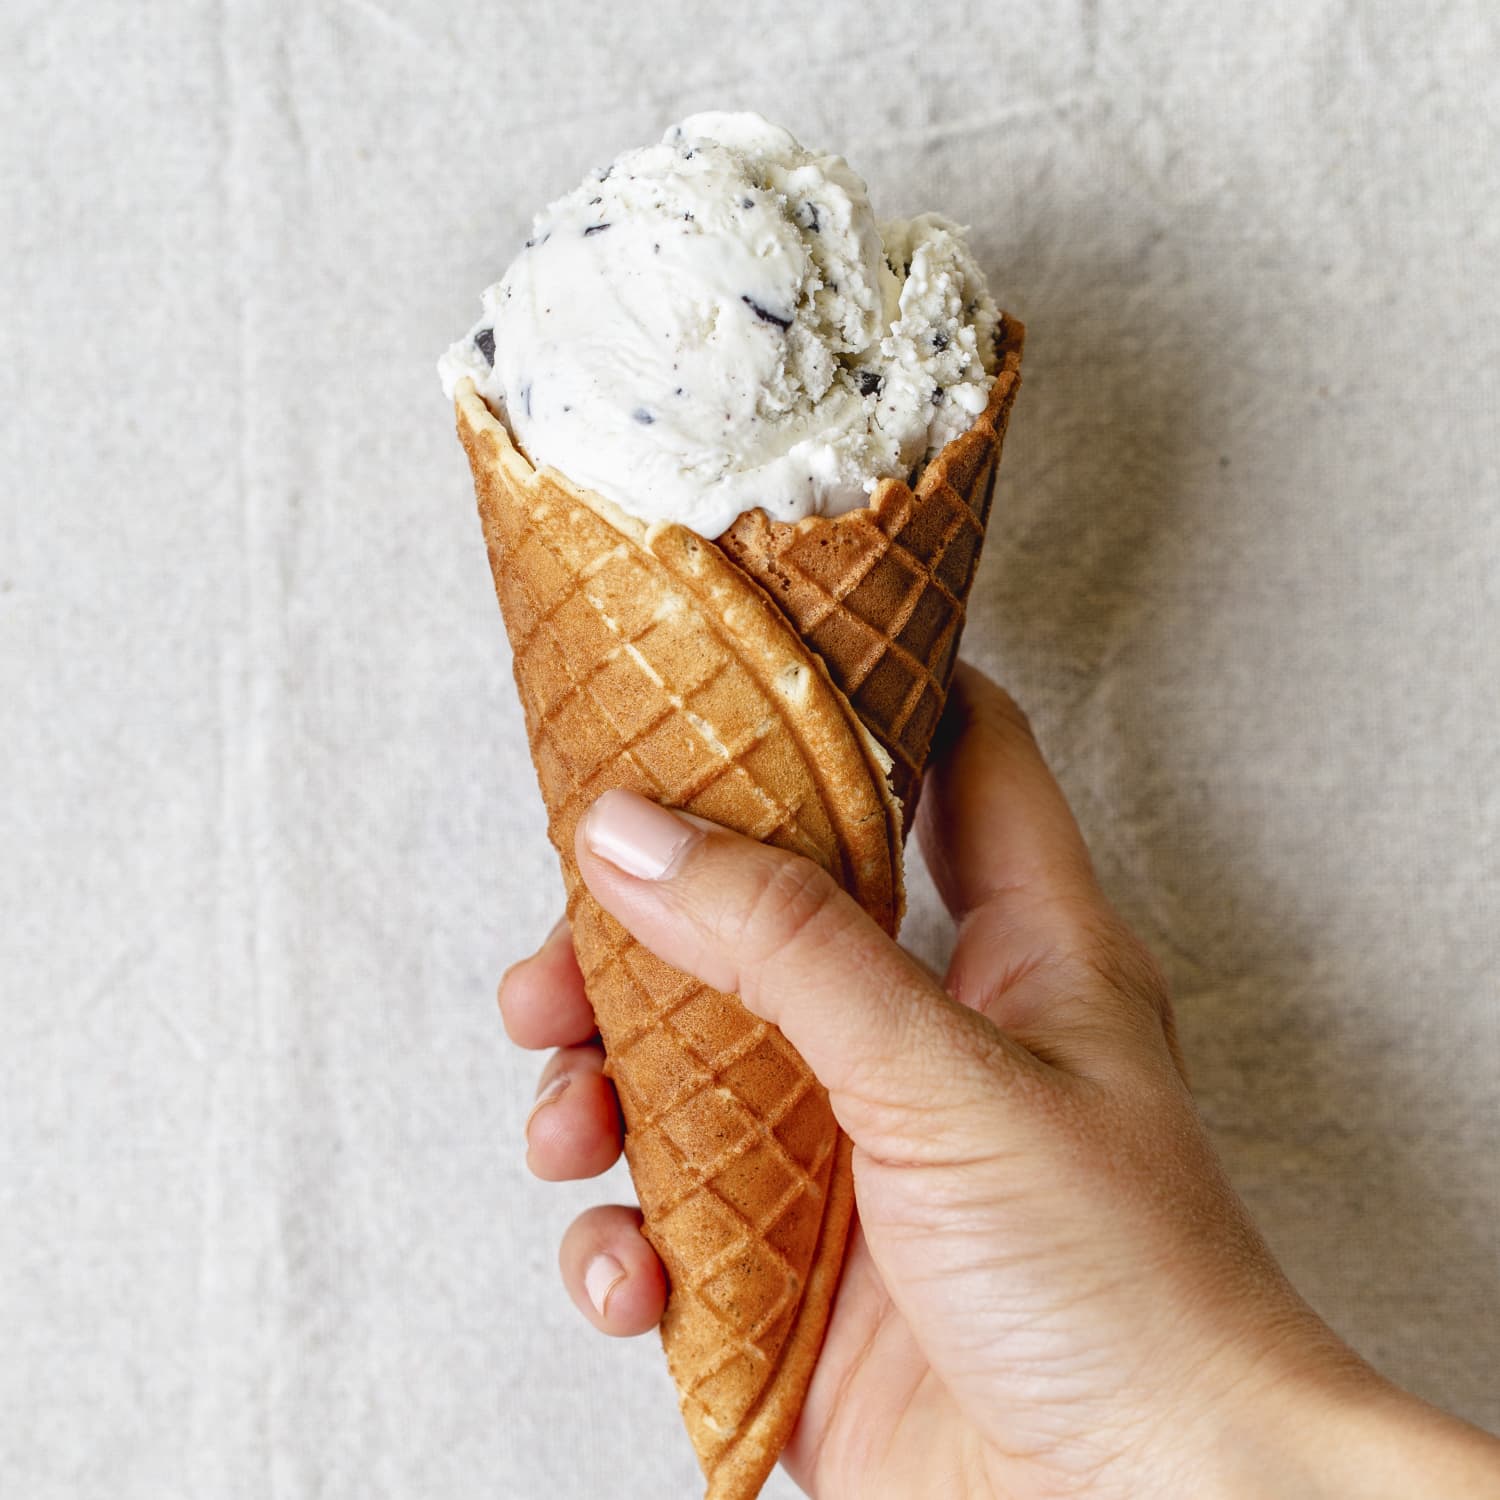 How to Make Homemade Ice Cream Cones